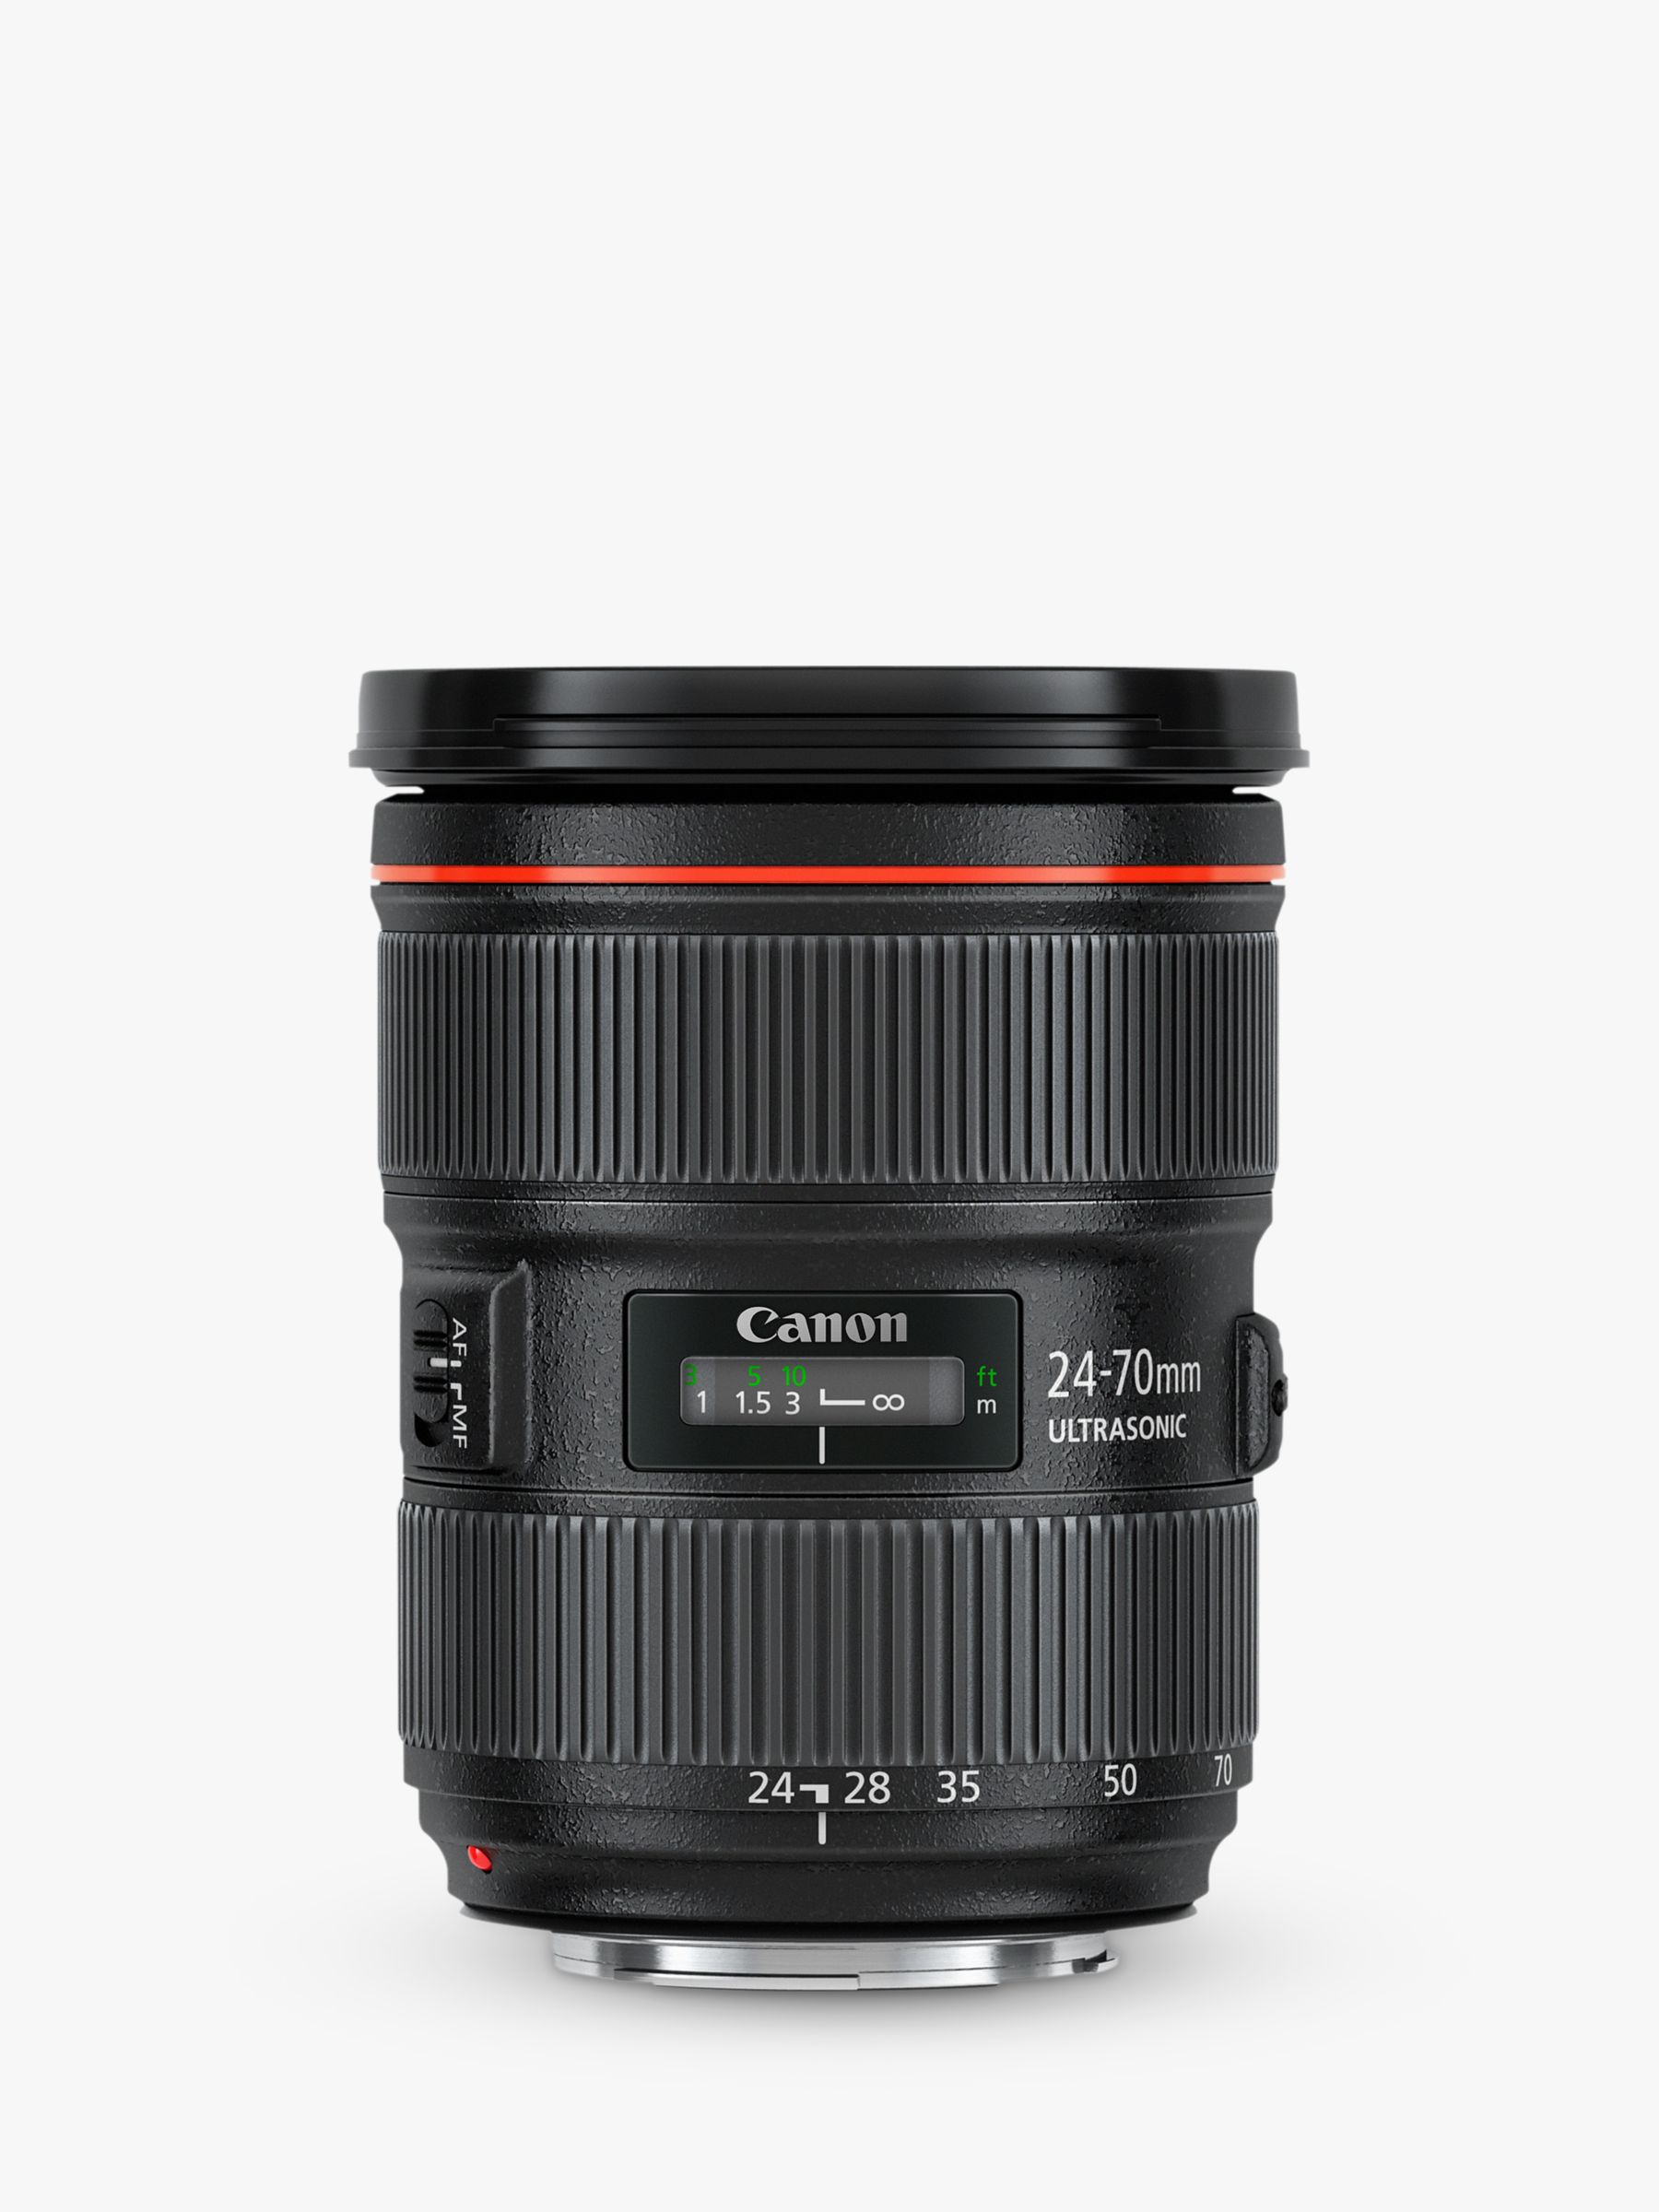 Image of Canon EF 2470mm f28L II USM Telephoto Lens